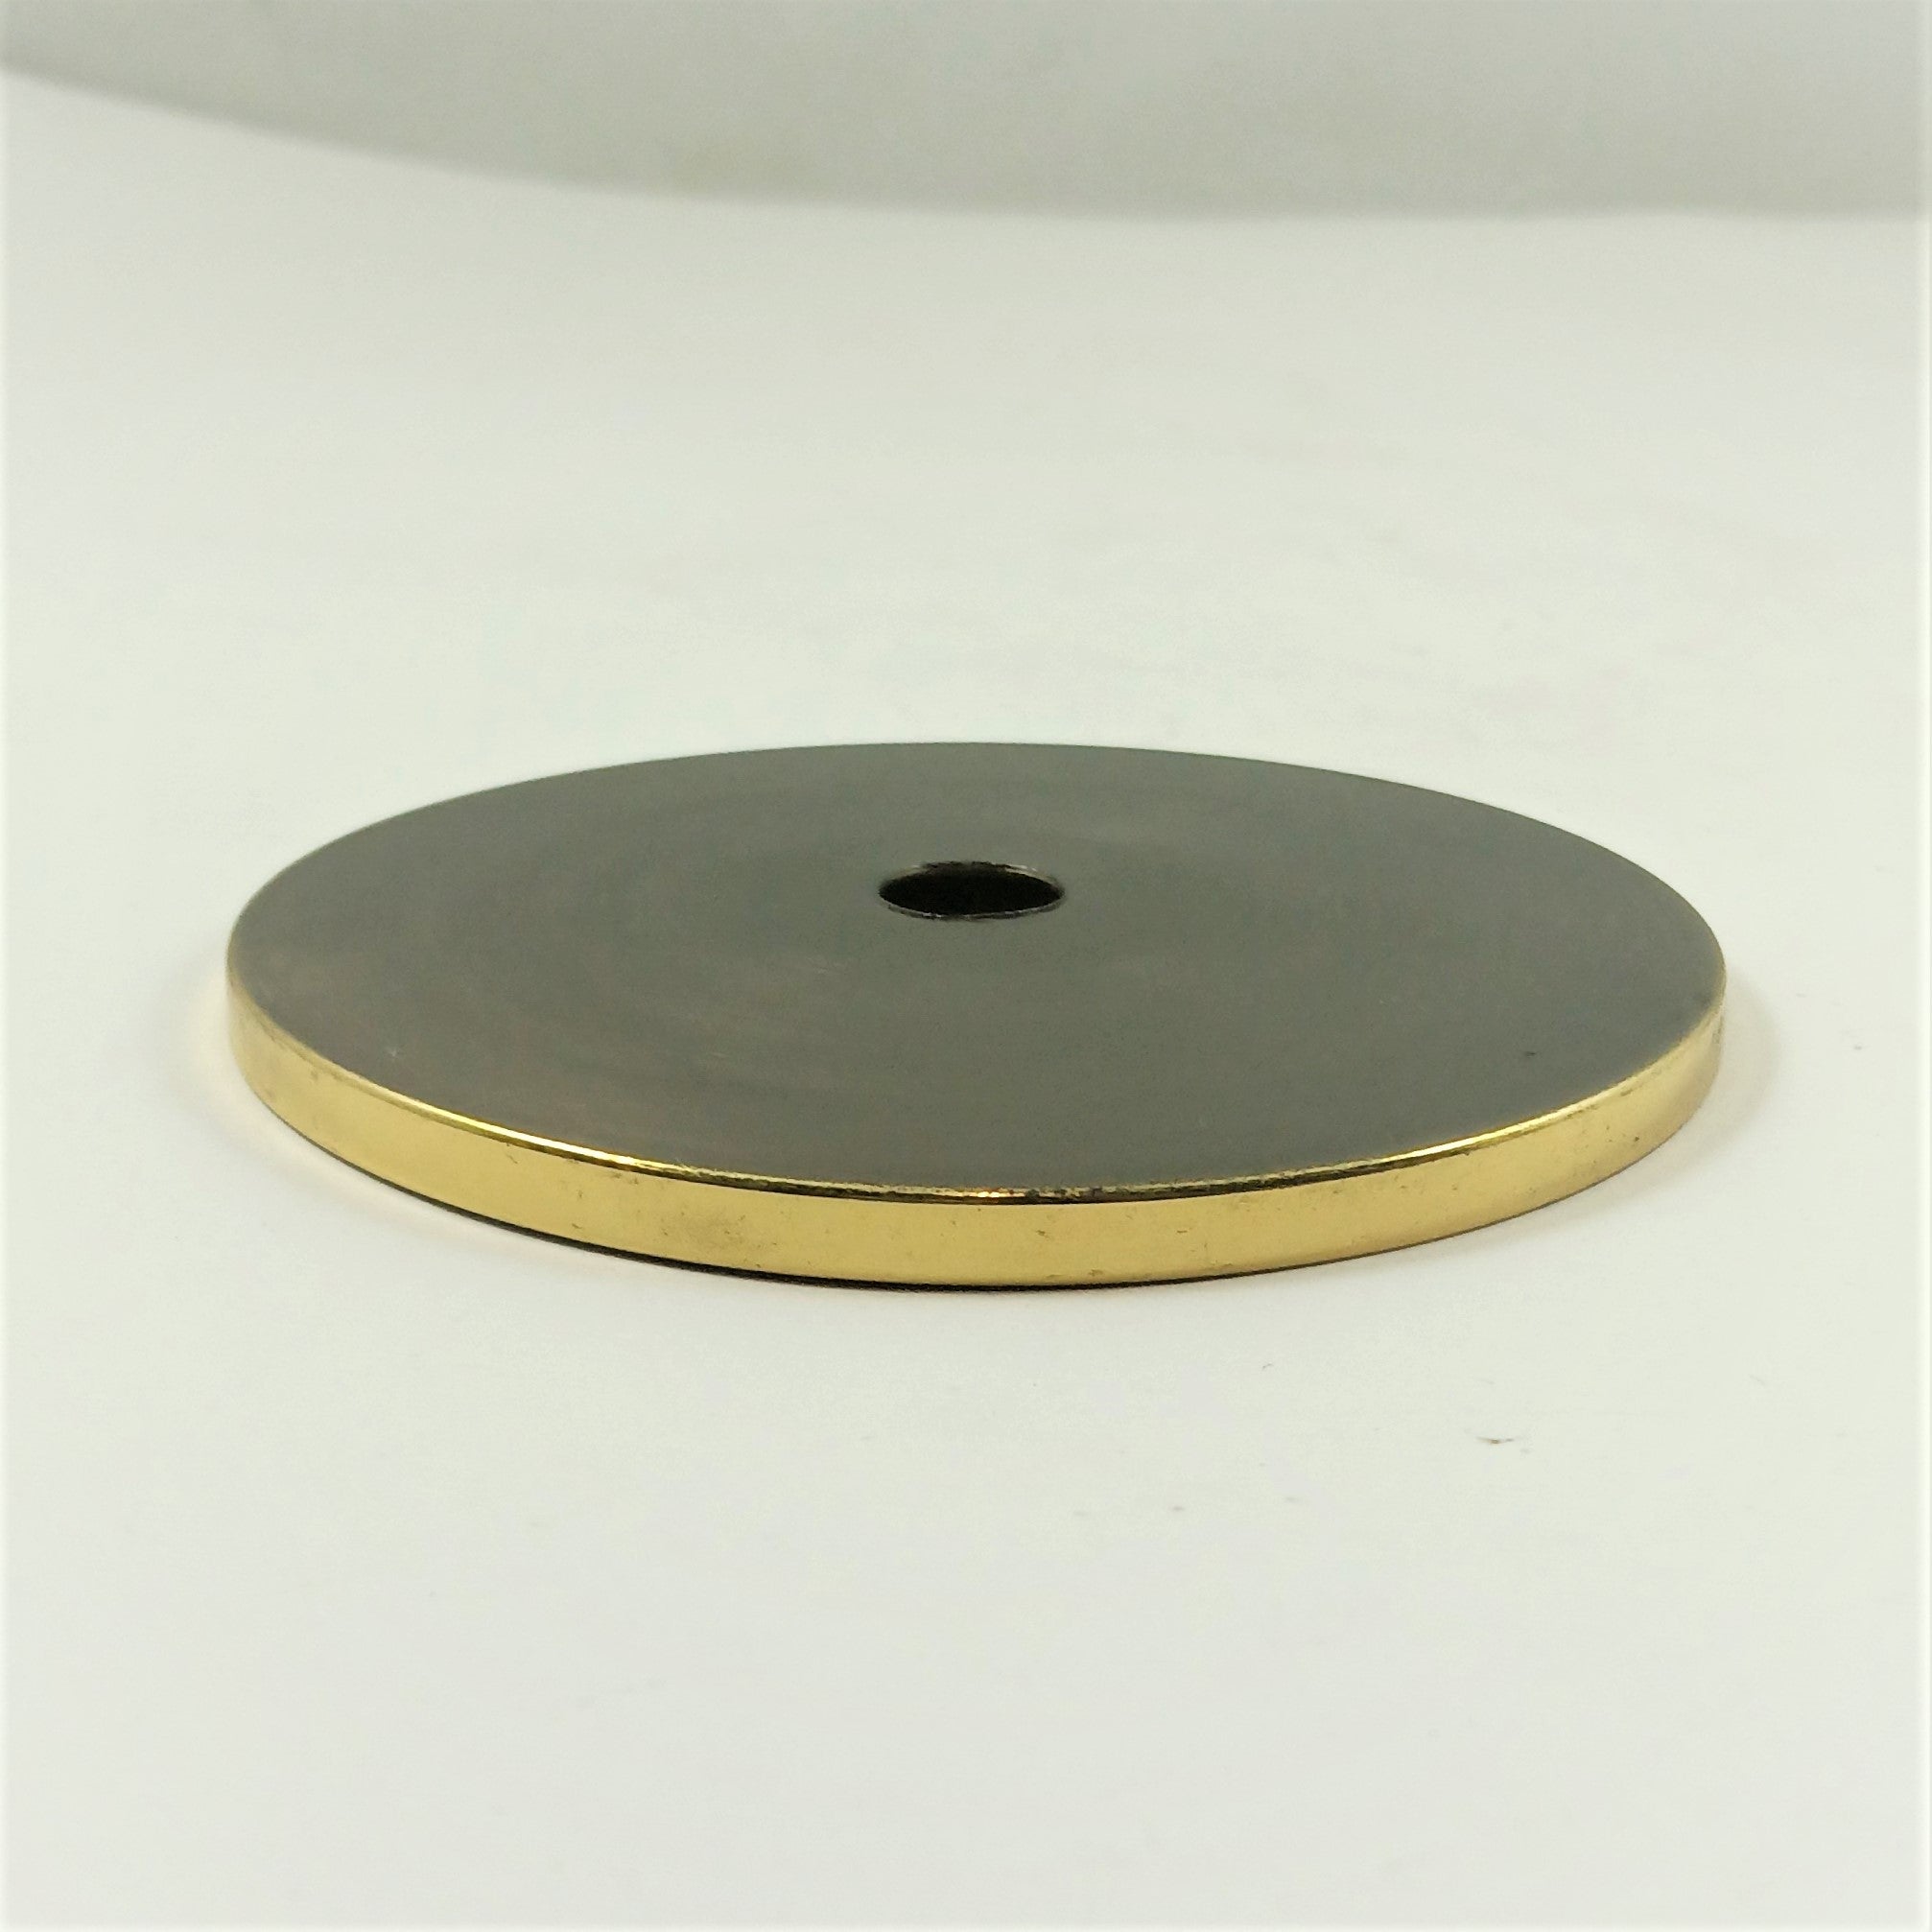 3-1/2" Steel Round Check Plate - Antique Brass - Center Hole Slips 1/8 IPS